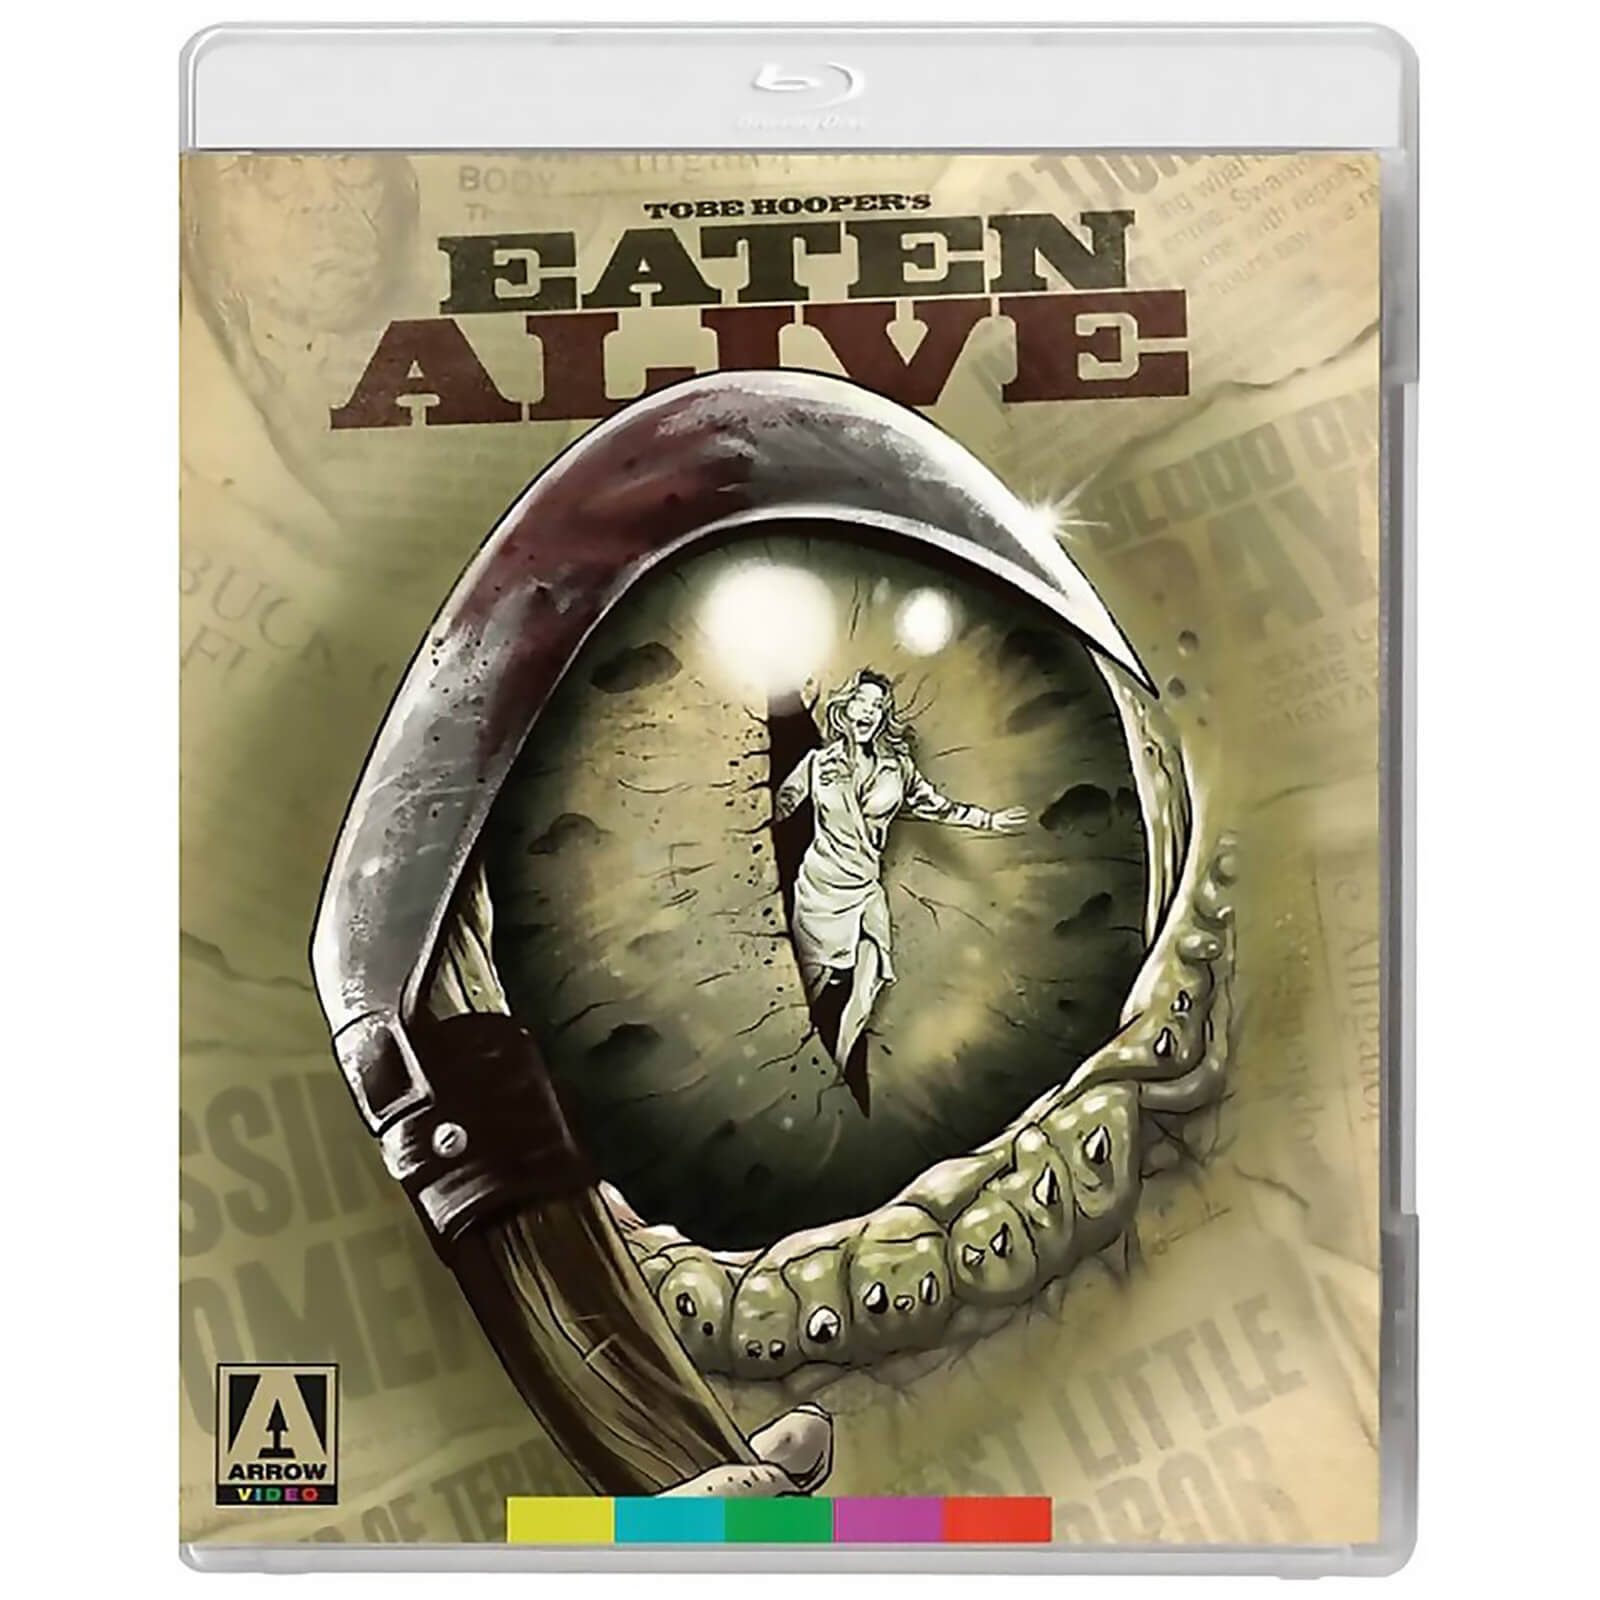 Eaten Alive [dual Format Blu-ray + Dvd] [region A & B], New, Dvd, Free & Fast